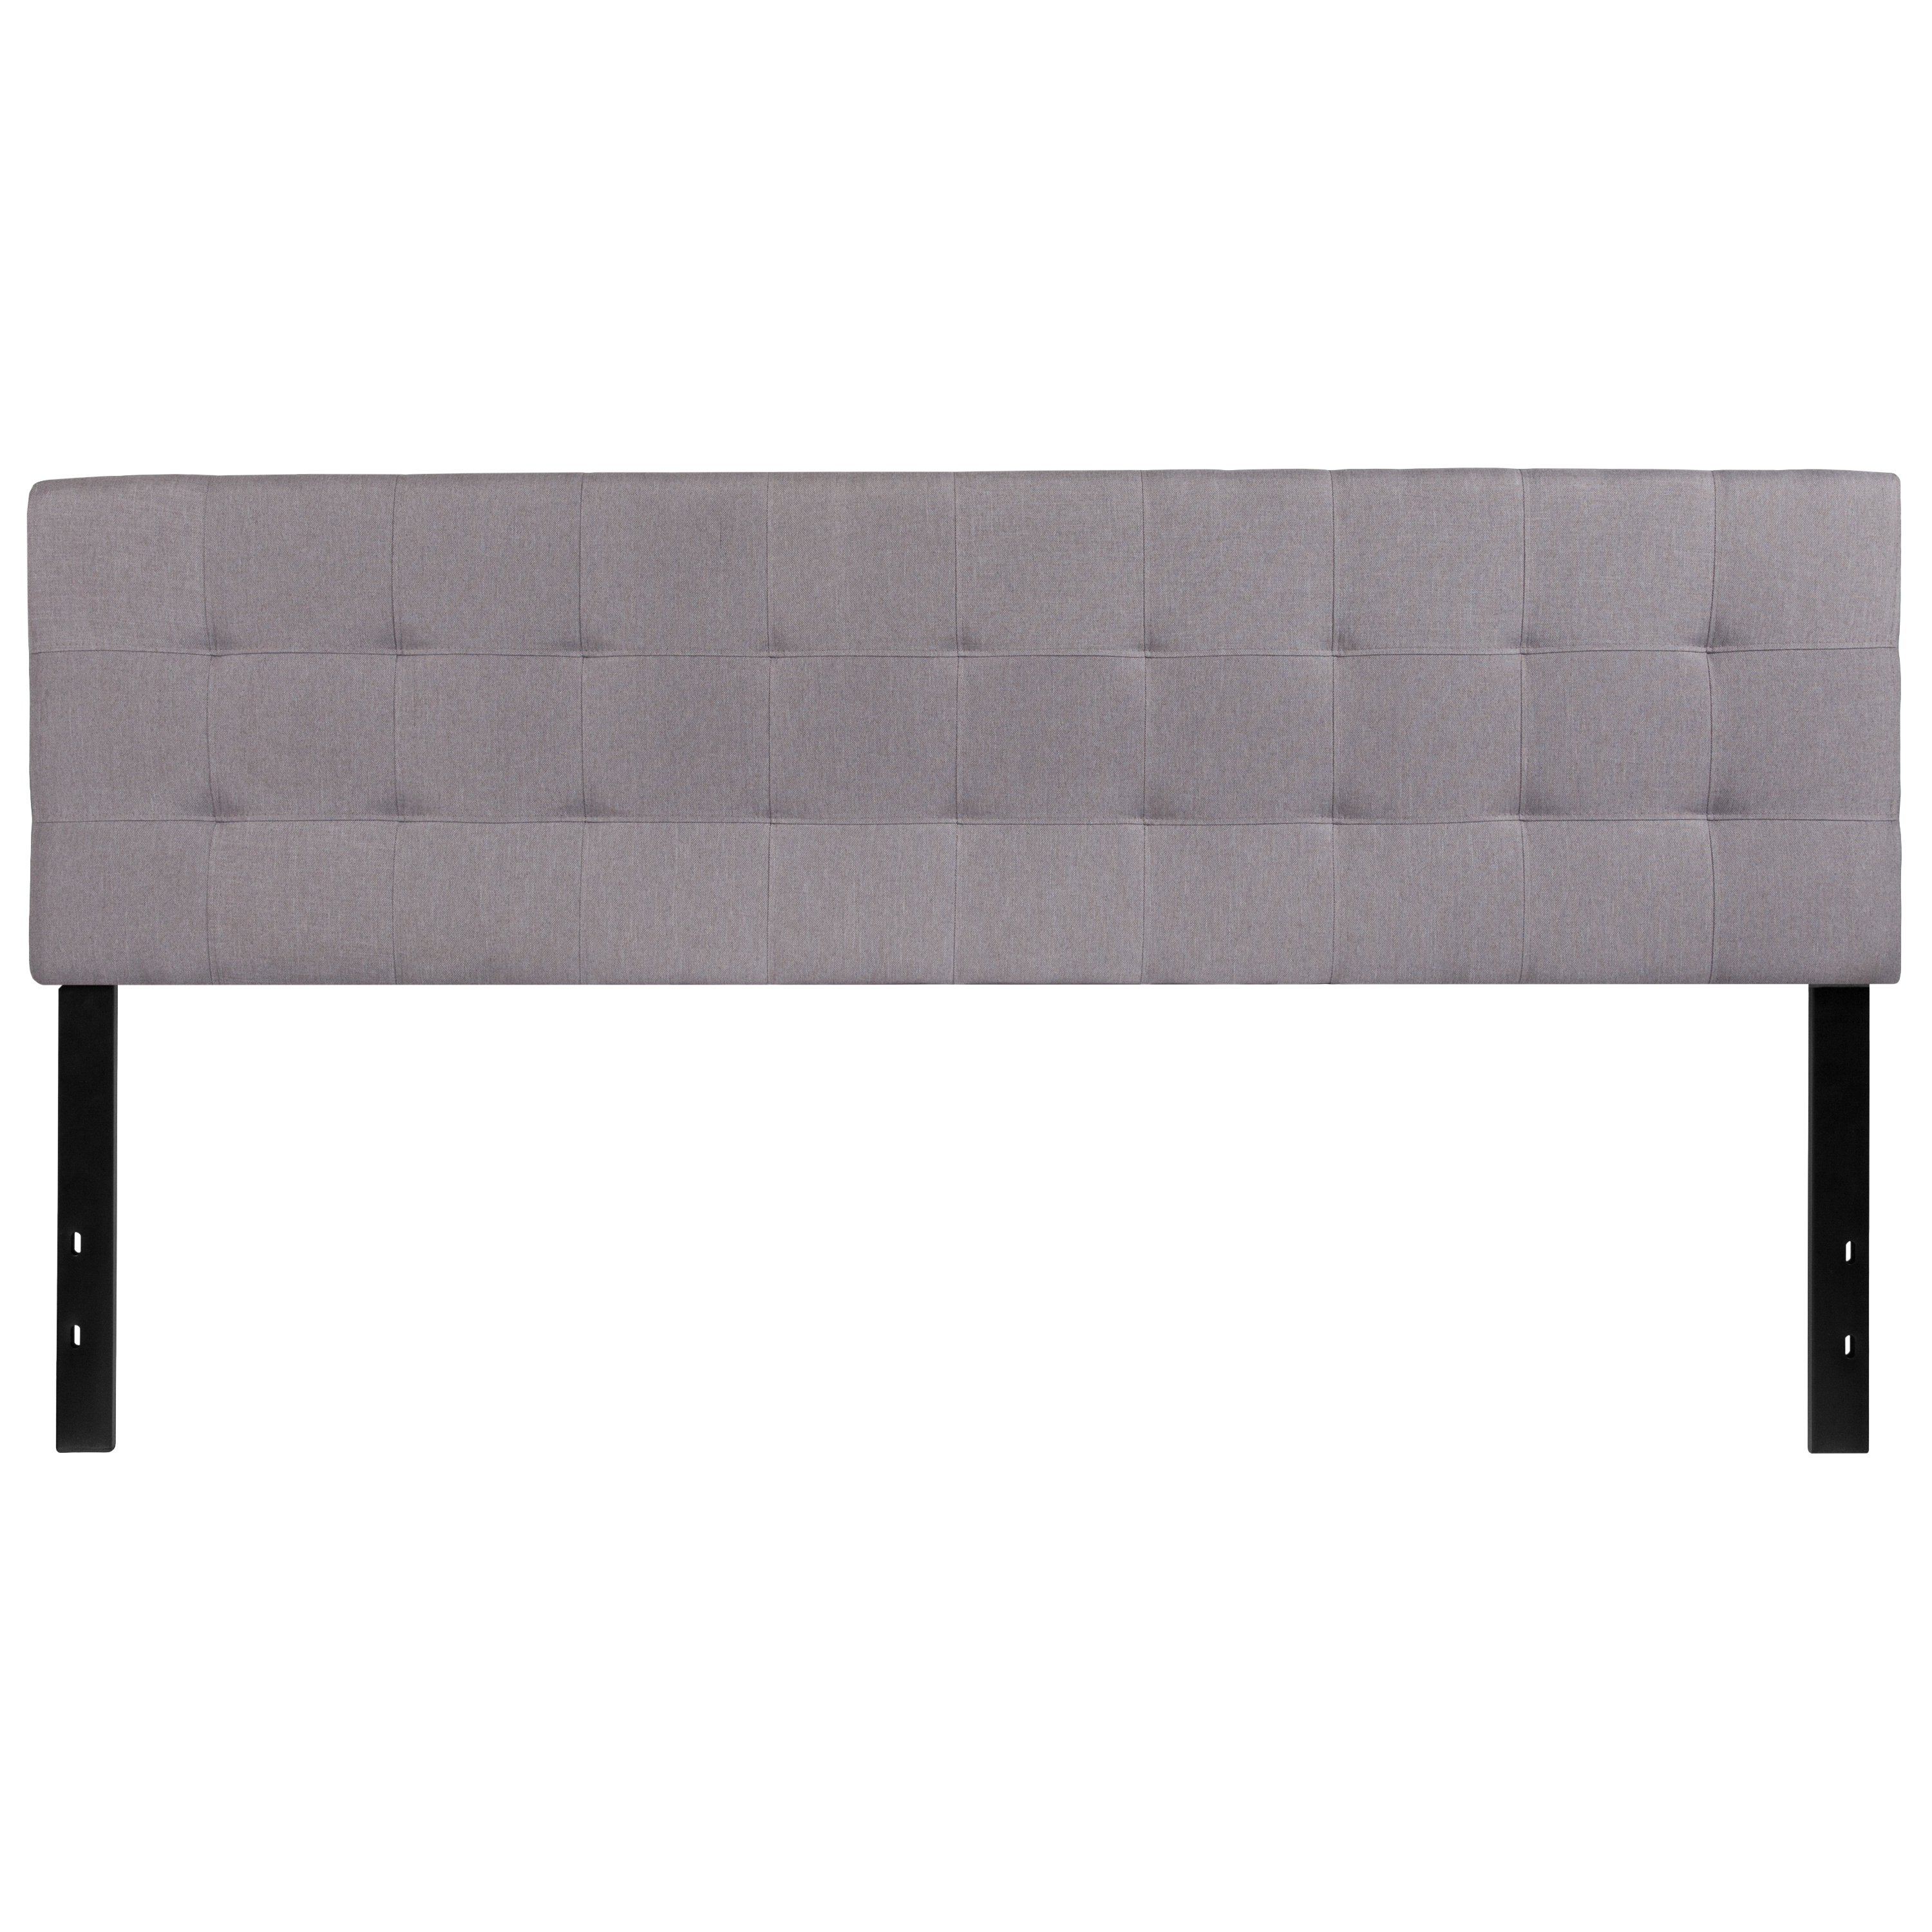 Flash Furniture Bedford Tufted Upholstered King Size Headboard in Dark Gray Fabric HG-HB1704-K-DG-GG